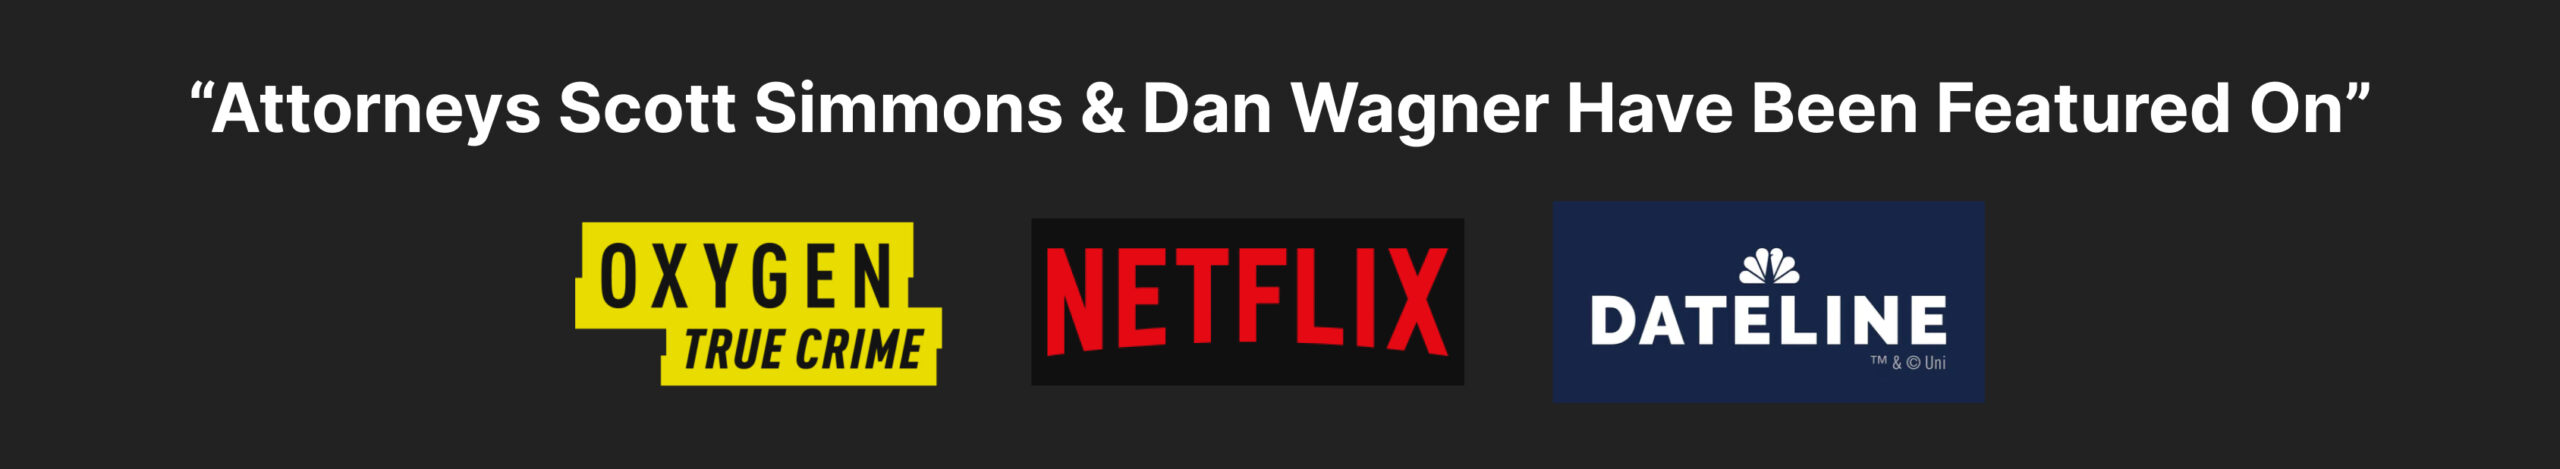 Attorneys Scott Simmons & Dan Wagner Have Been Featured On  Netflix - Oxygen Network - Dateline